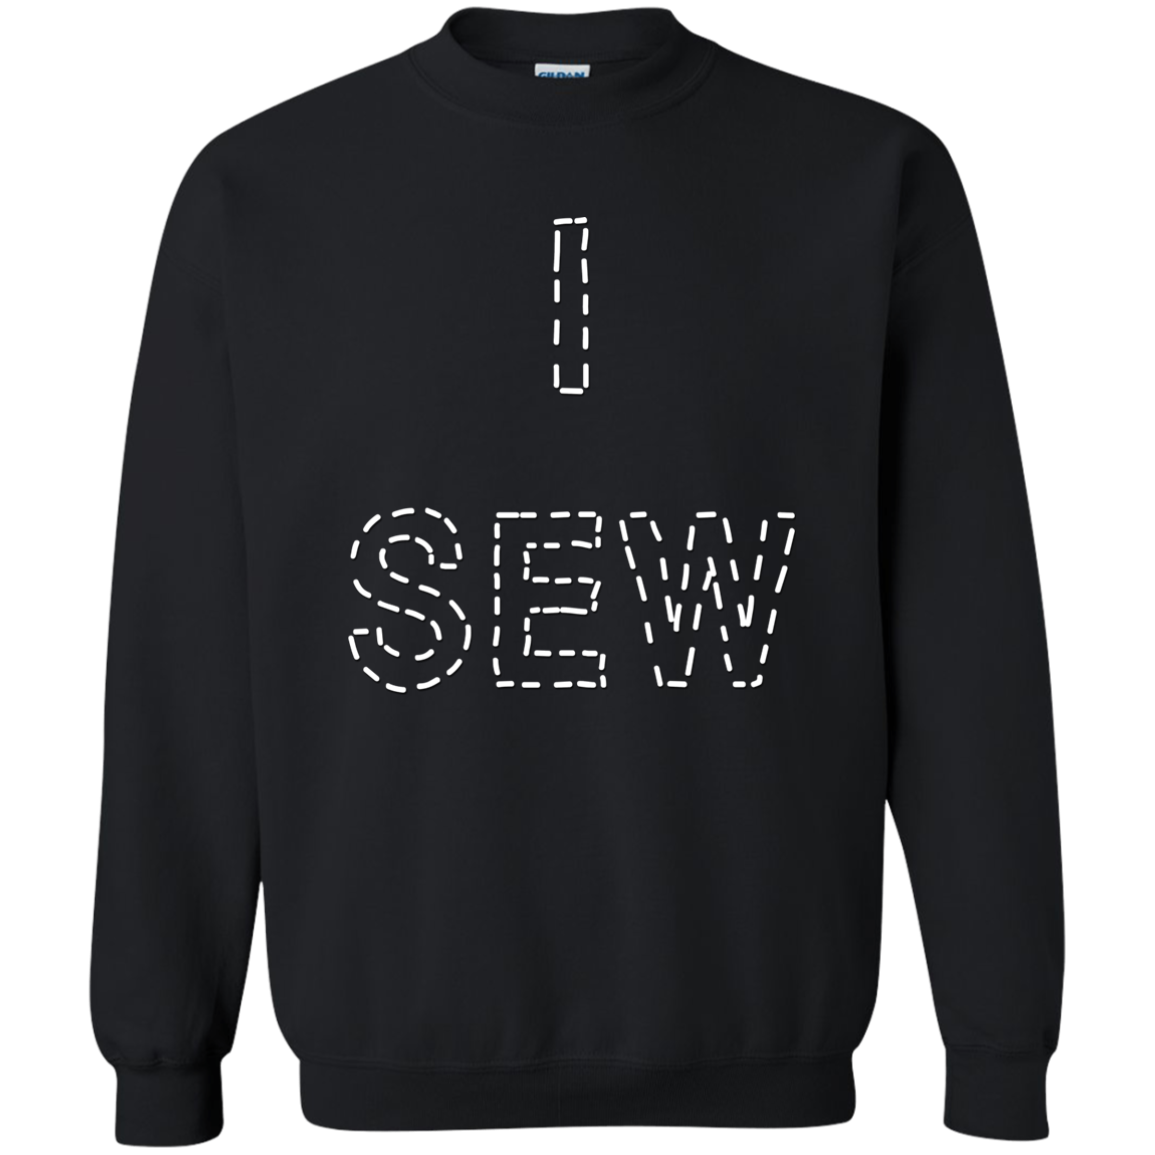 I Sew Crewneck Pullover Sweatshirt